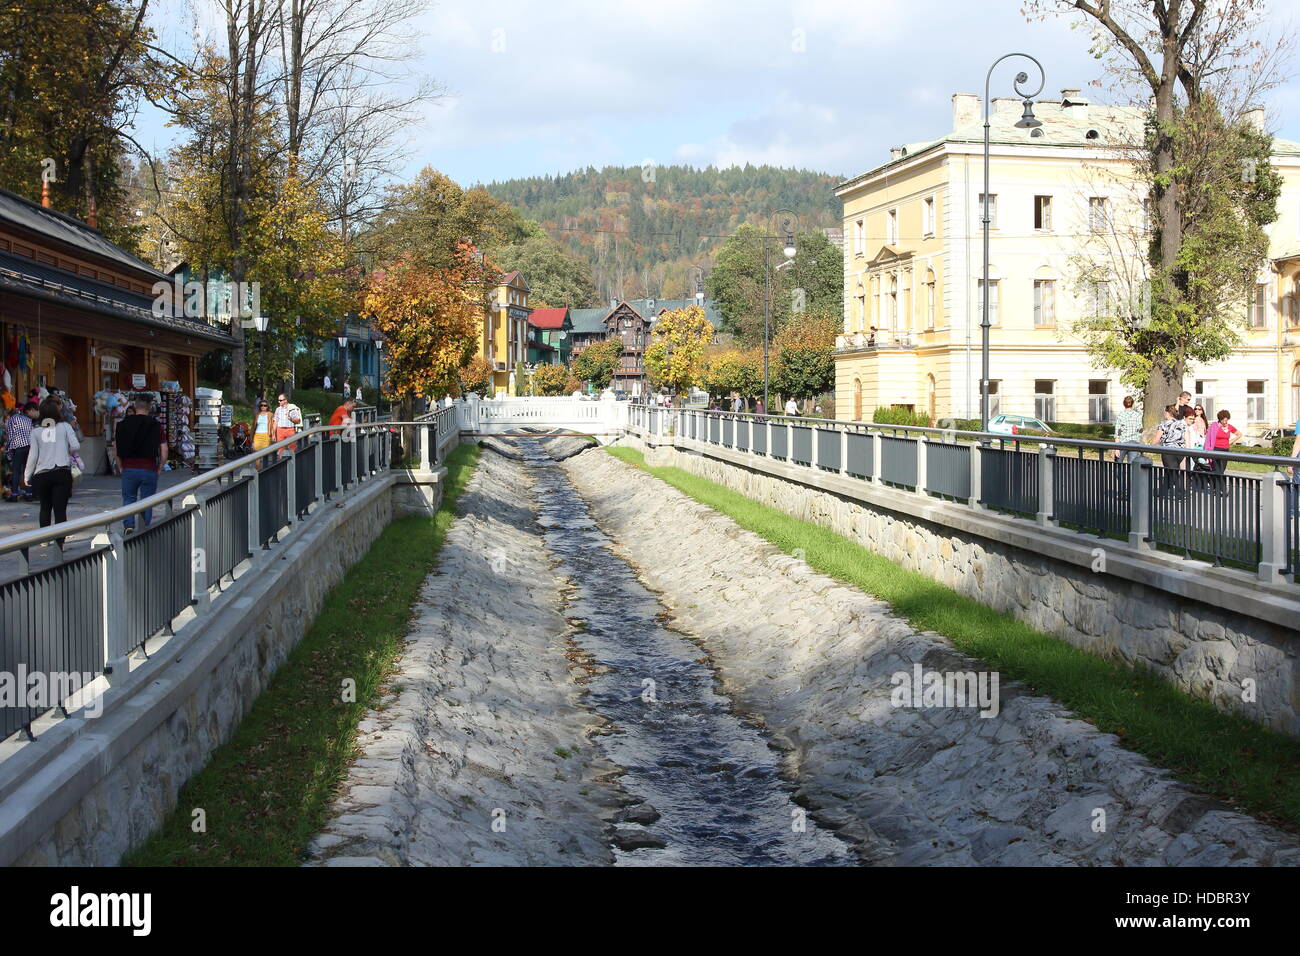 KRYNICA ZDROJ, POLAND - OCTOBER 13, 2016. River in Historic city center of Krynica Zdroj. Stock Photo